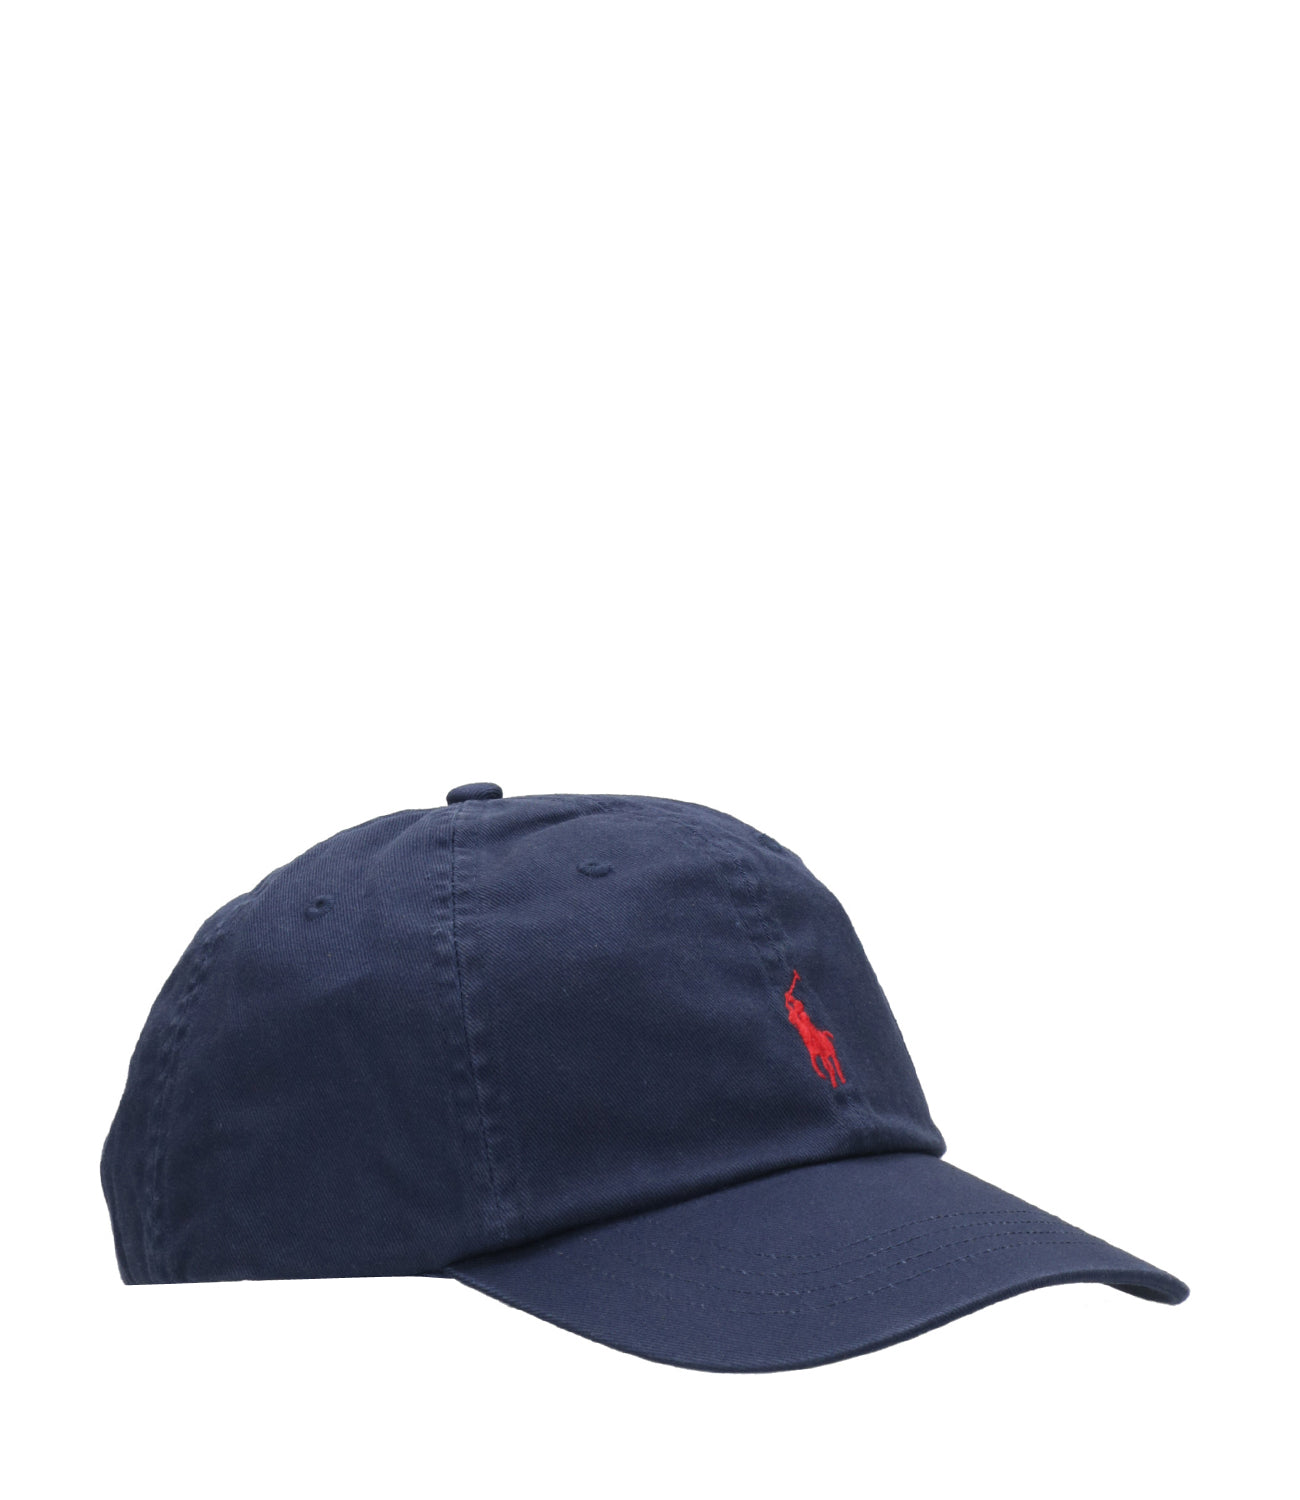 Polo Ralph Lauren | Navy Blue Hat